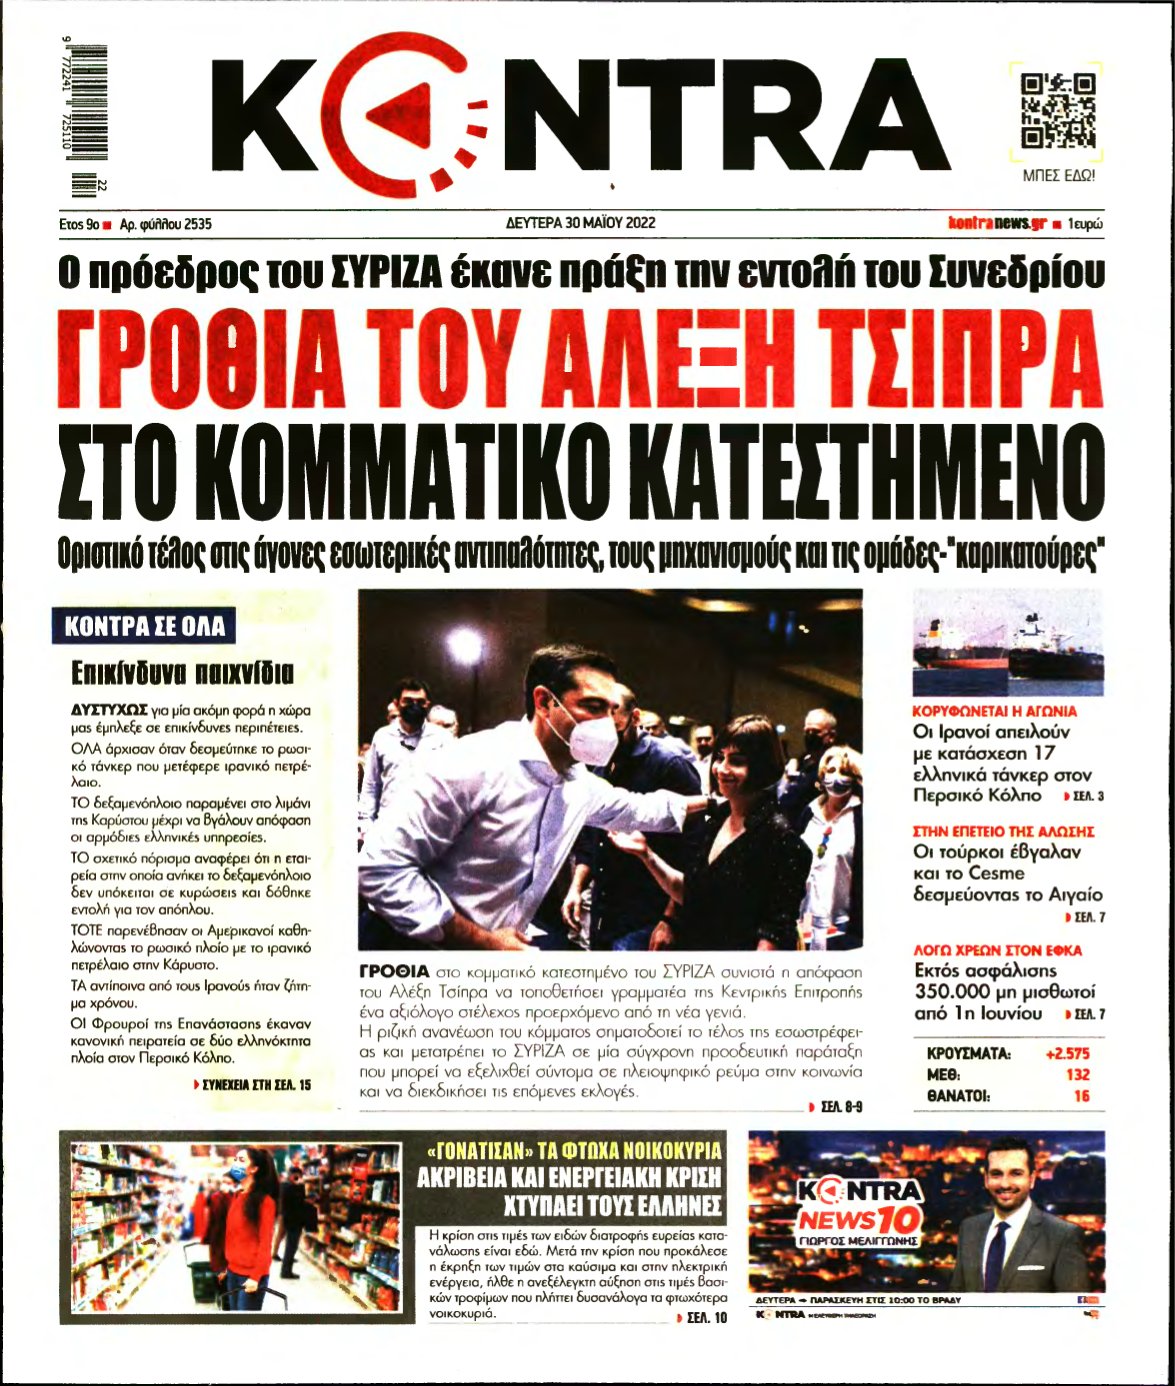 KONTRA NEWS – 30/05/2022